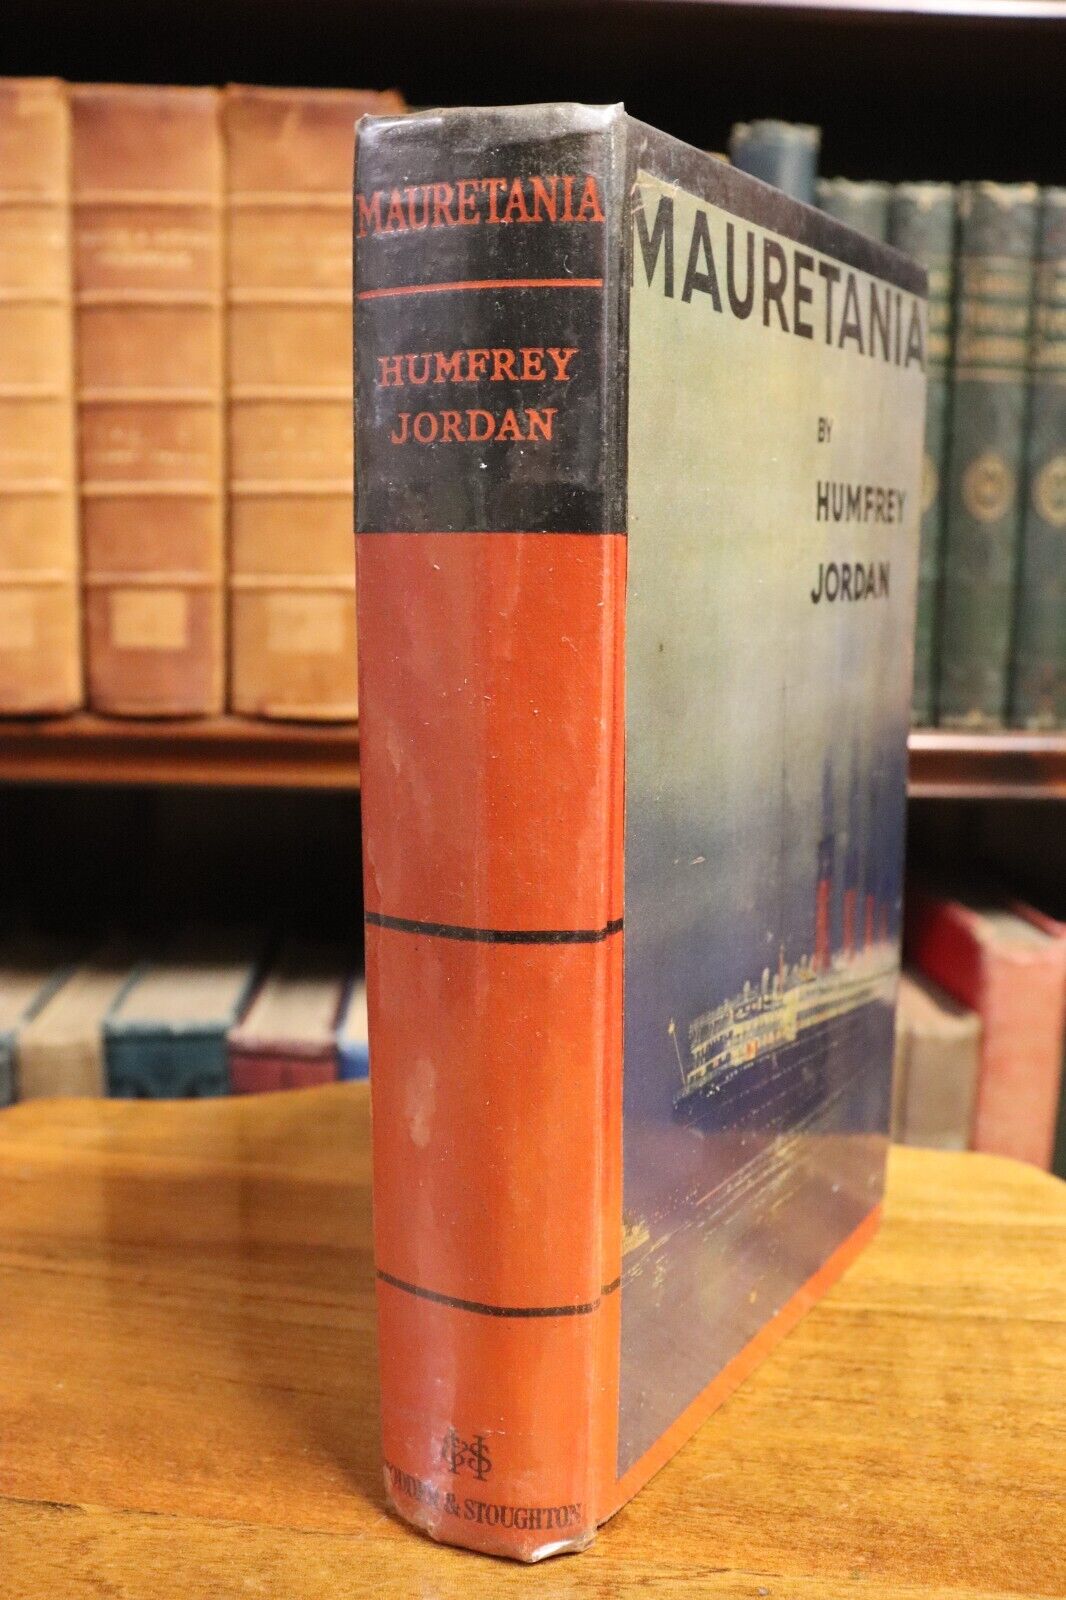 Mauretania by Humfrey Jordan - 1936 - 1st Edition Maritime History Book